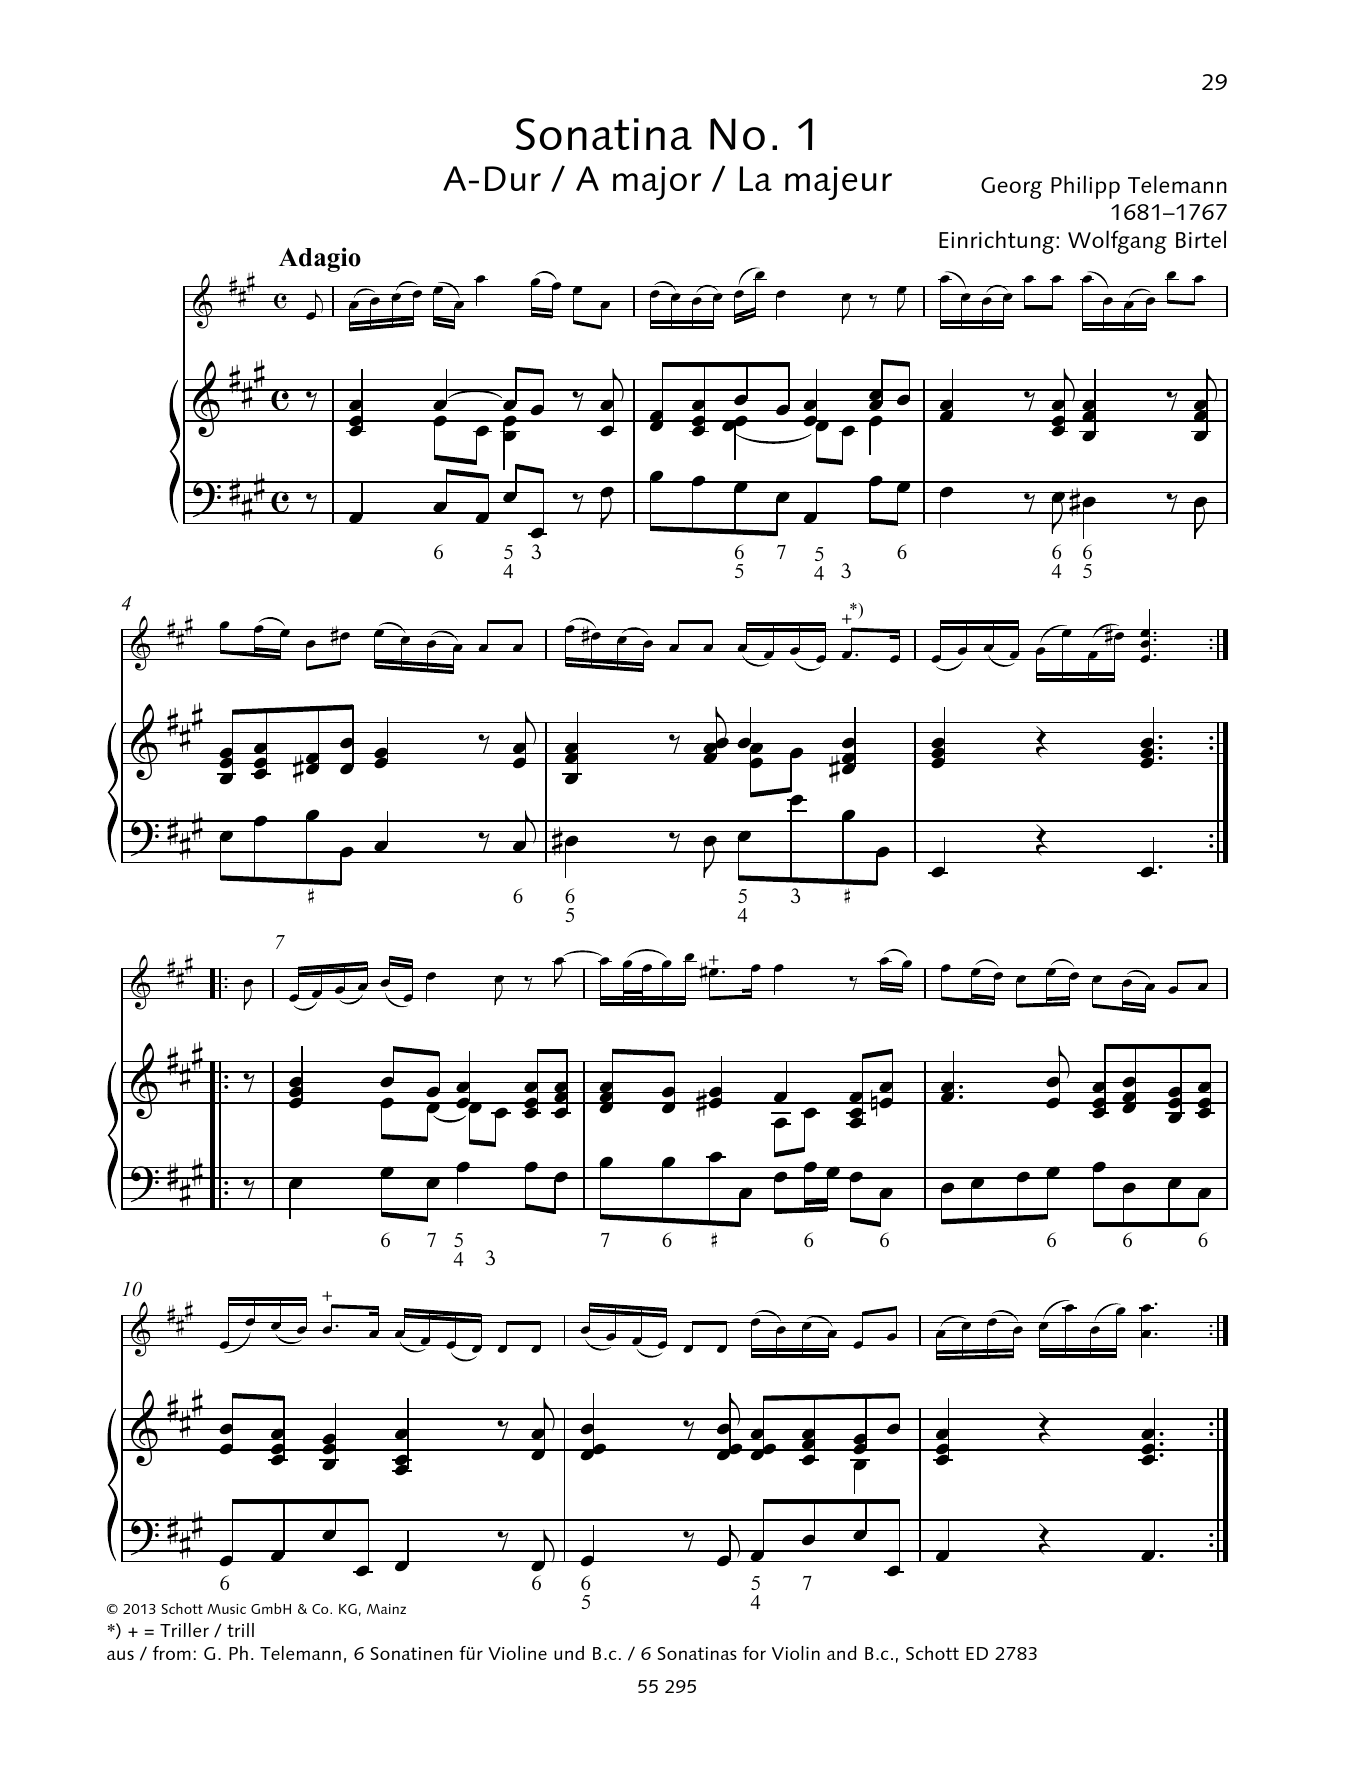 Download Georg Philipp Telemann Sonatina No. 1 Sheet Music